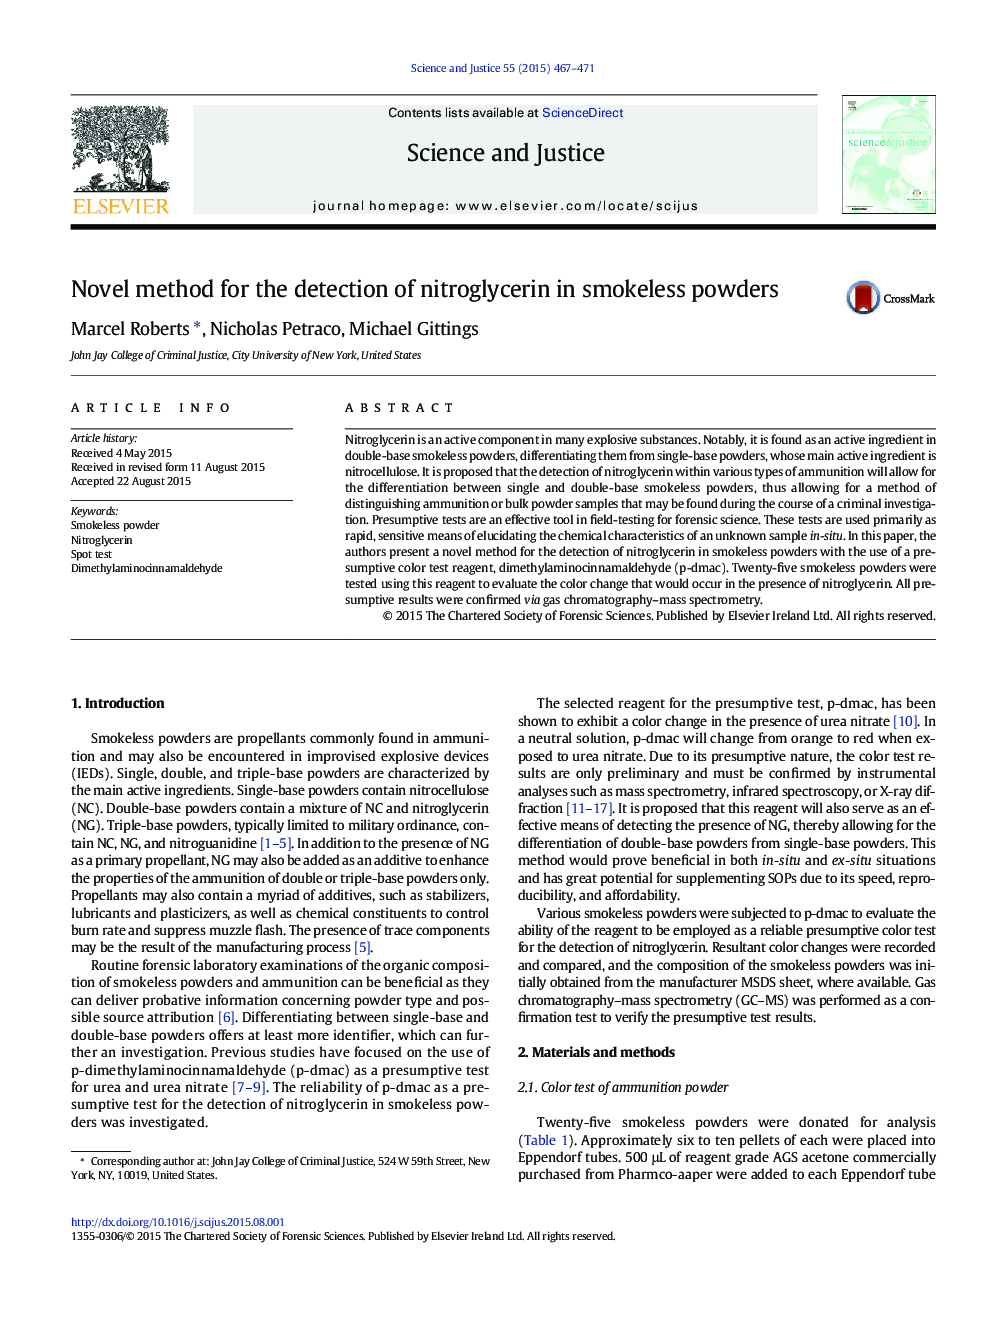 Novel method for the detection of nitroglycerin in smokeless powders